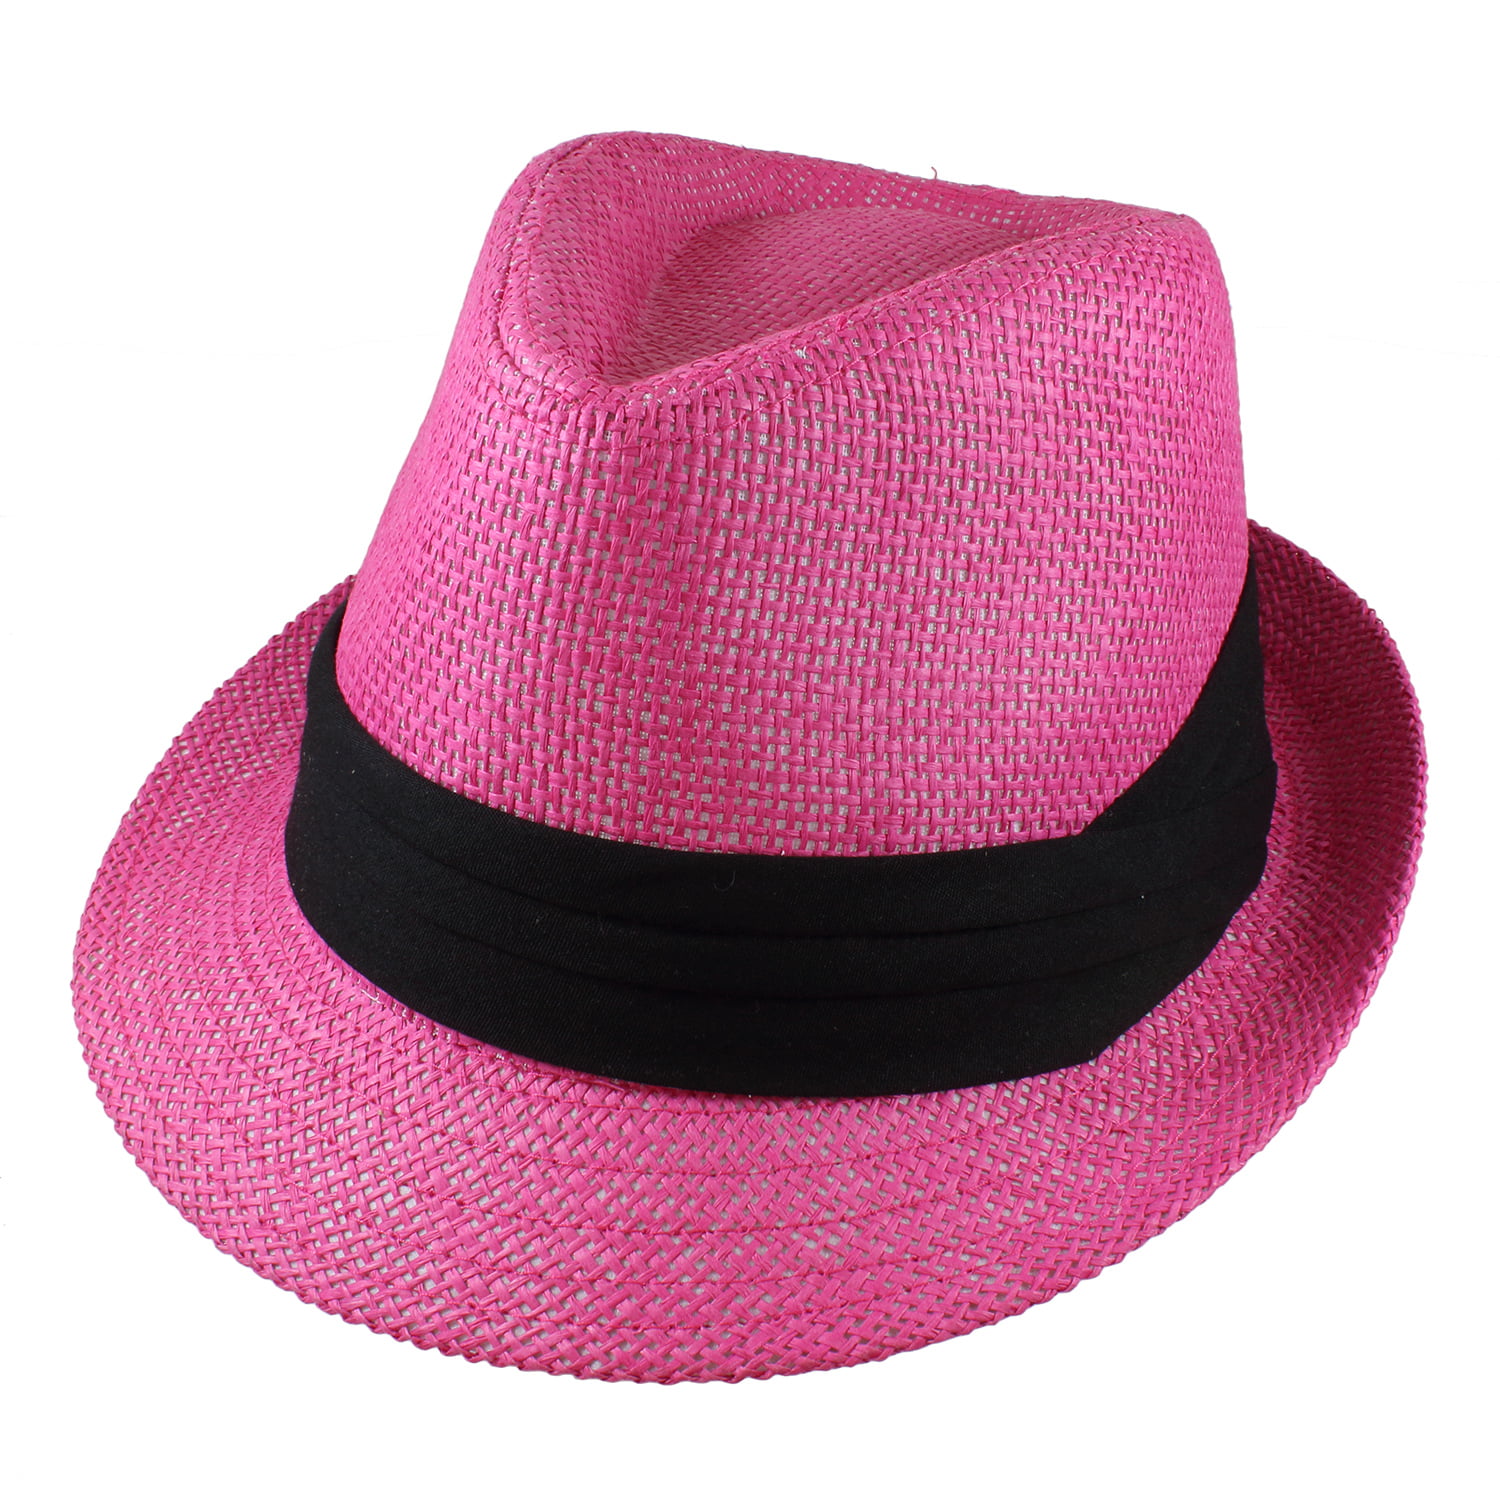 Gelante Summer Fedora Panama Straw Hats with Black Band - Pink, L/XL